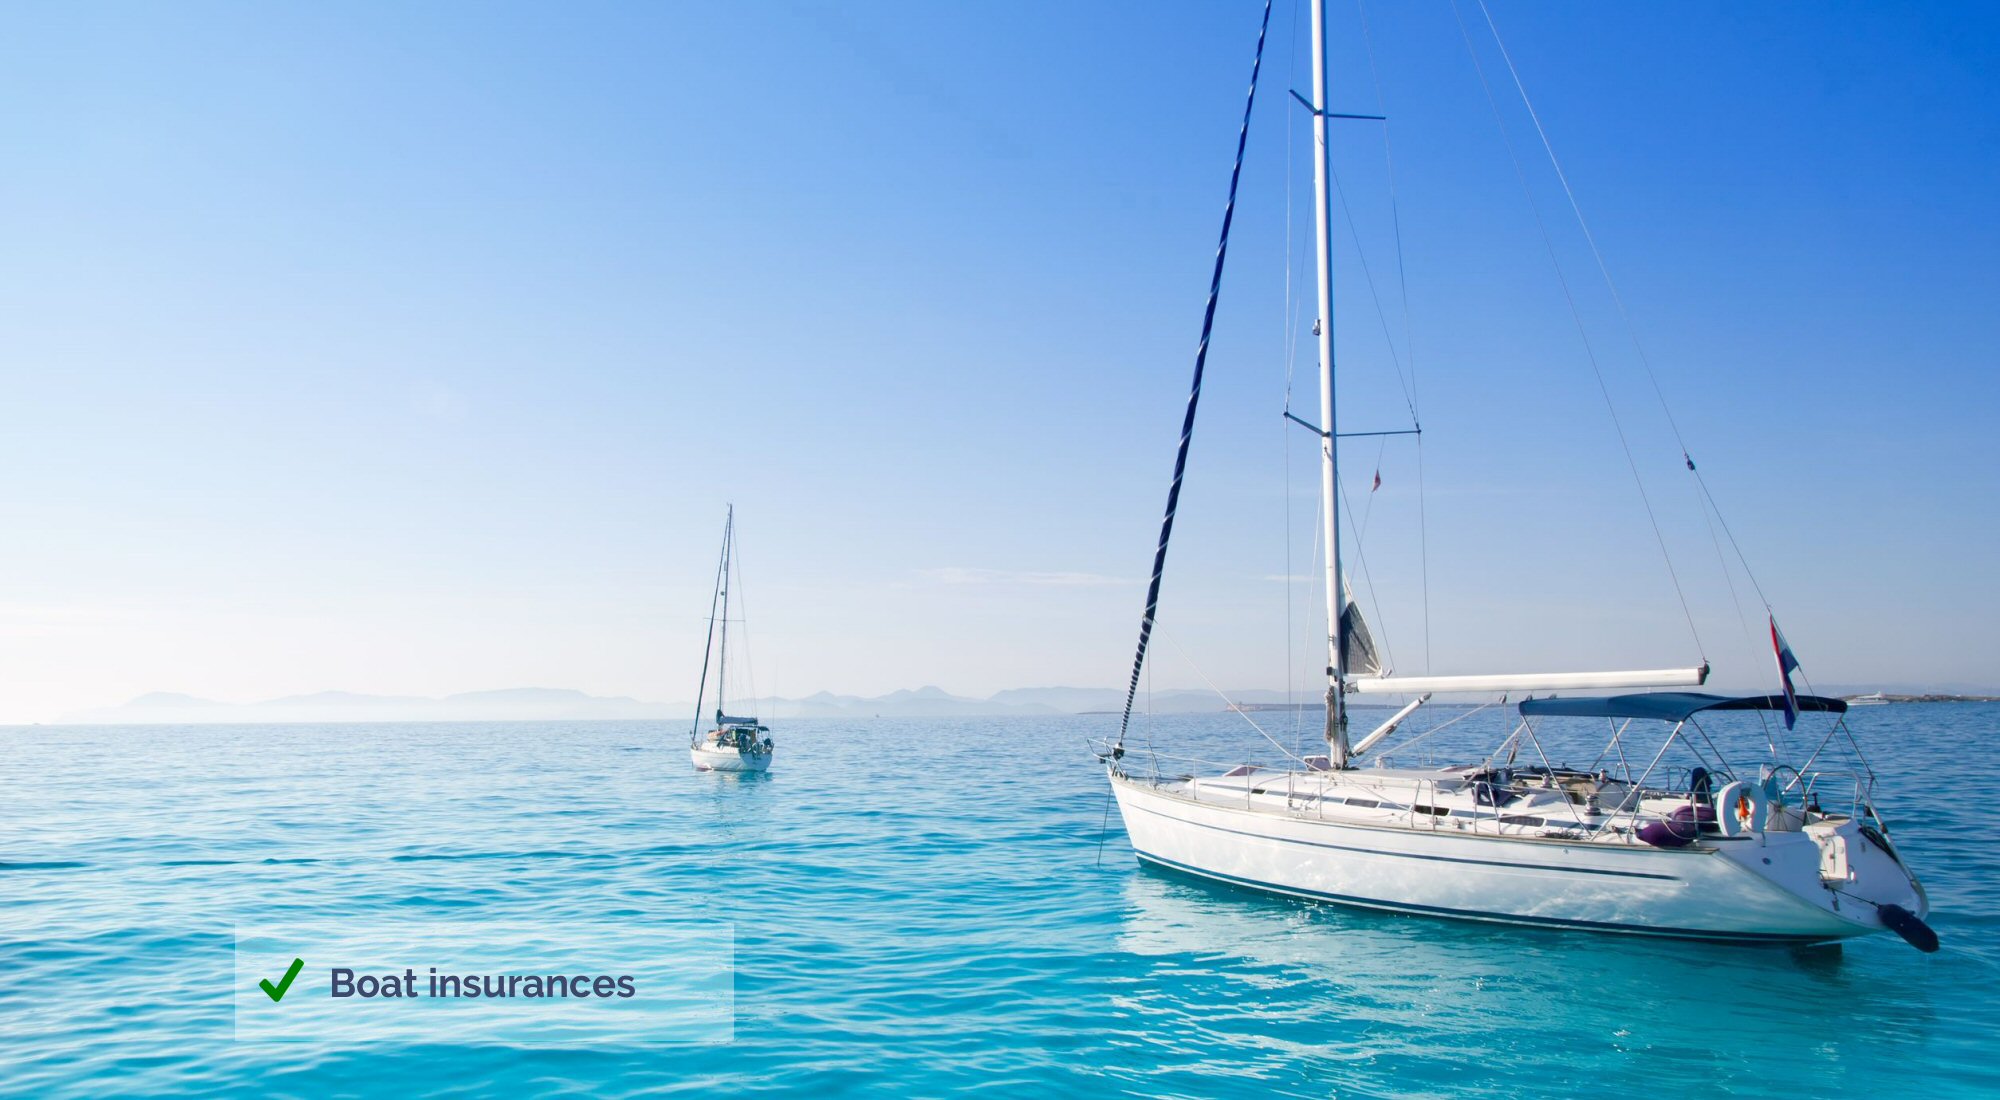 Boat insurance in Spain